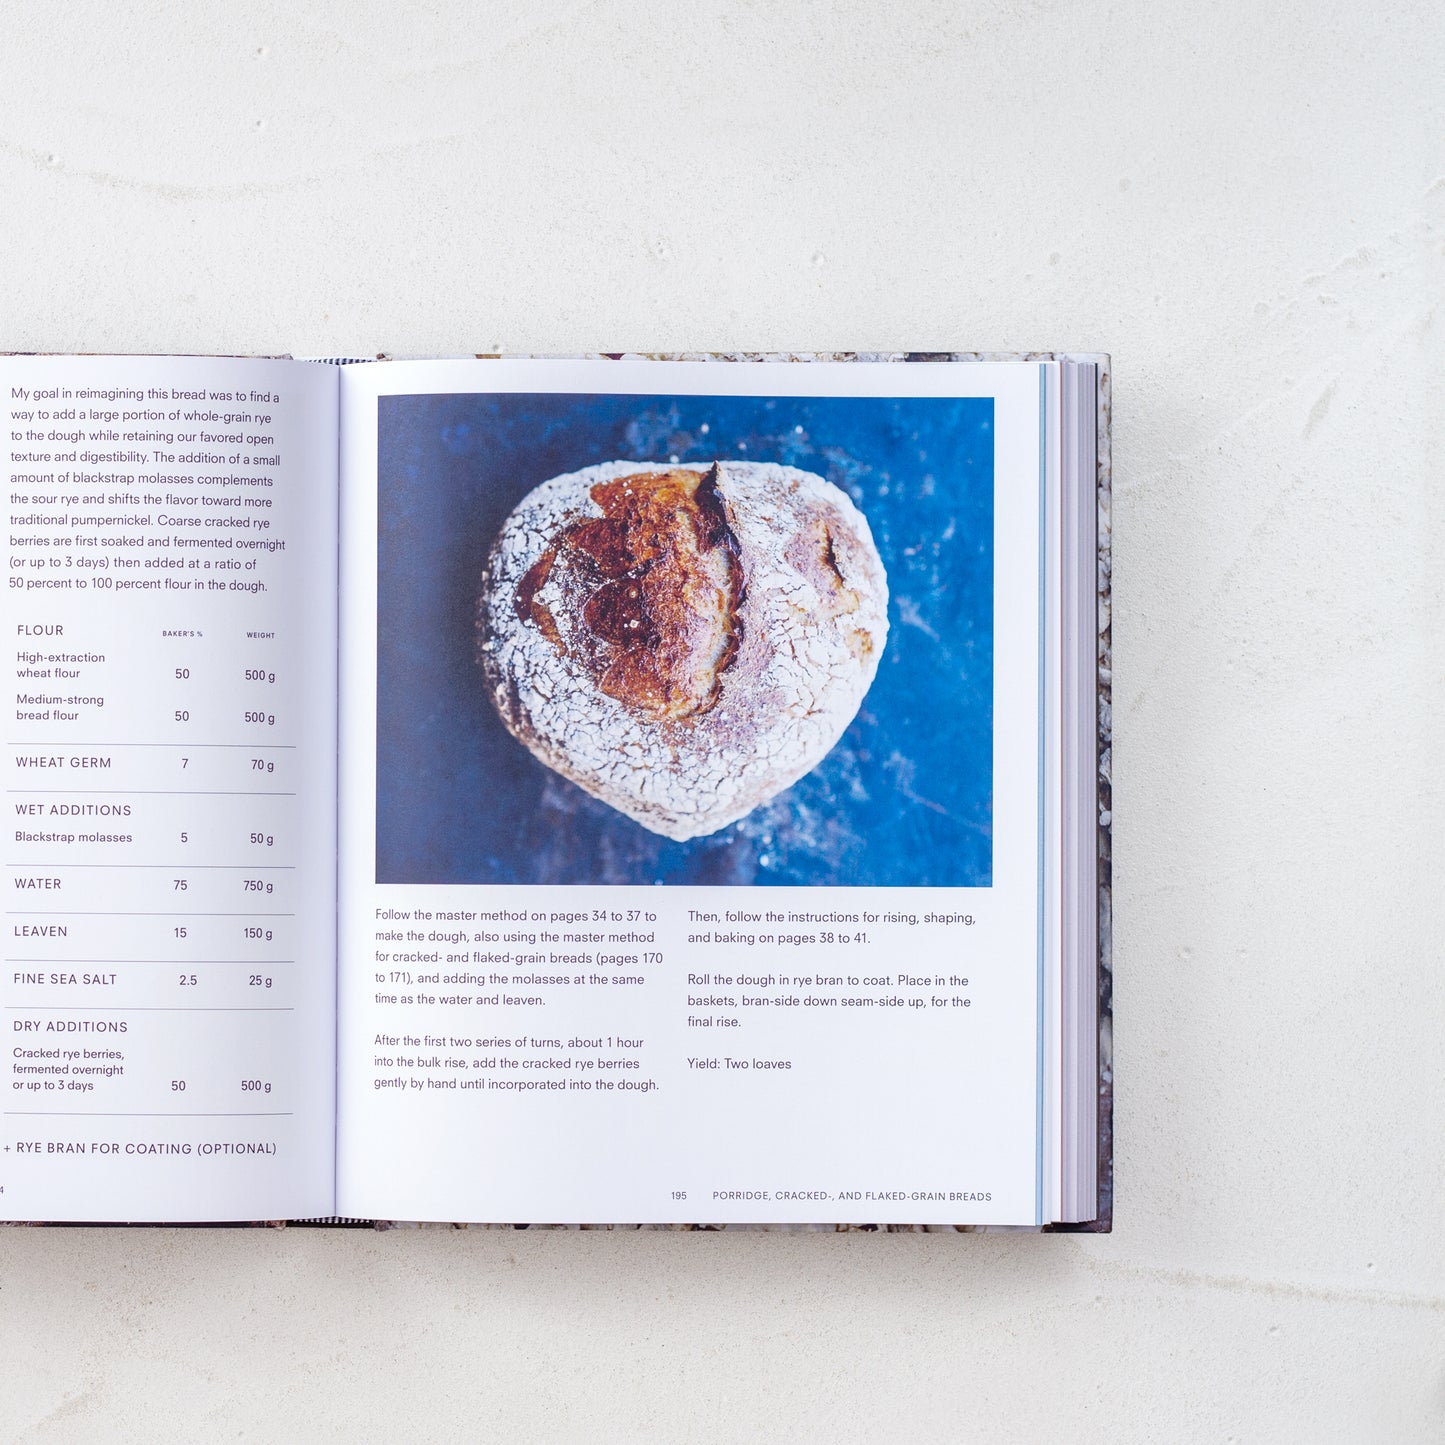 tartine bakery cookbook